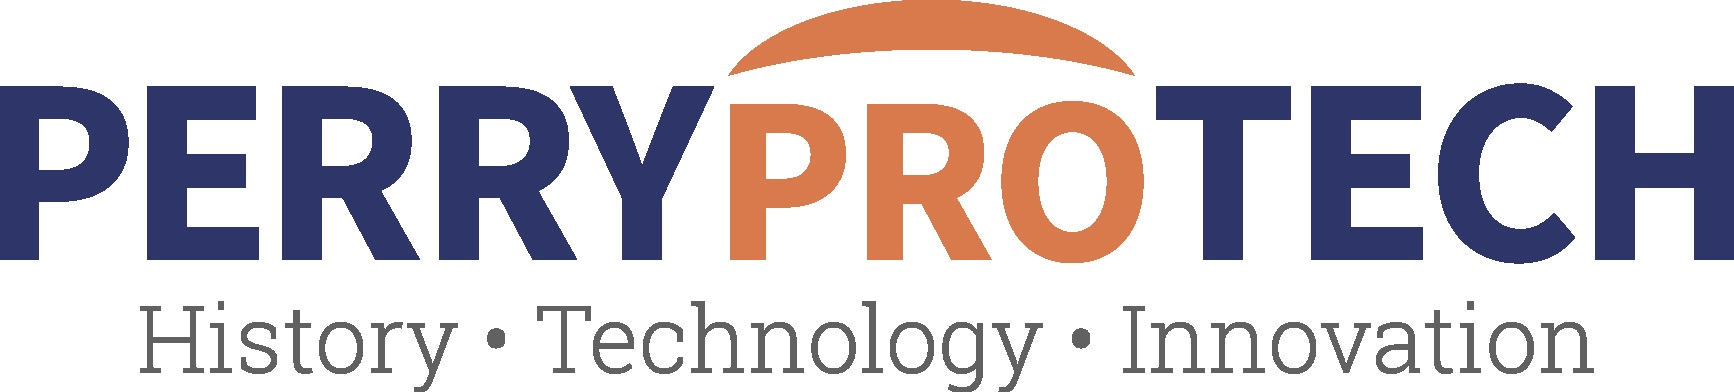 PERRY proTECH logo